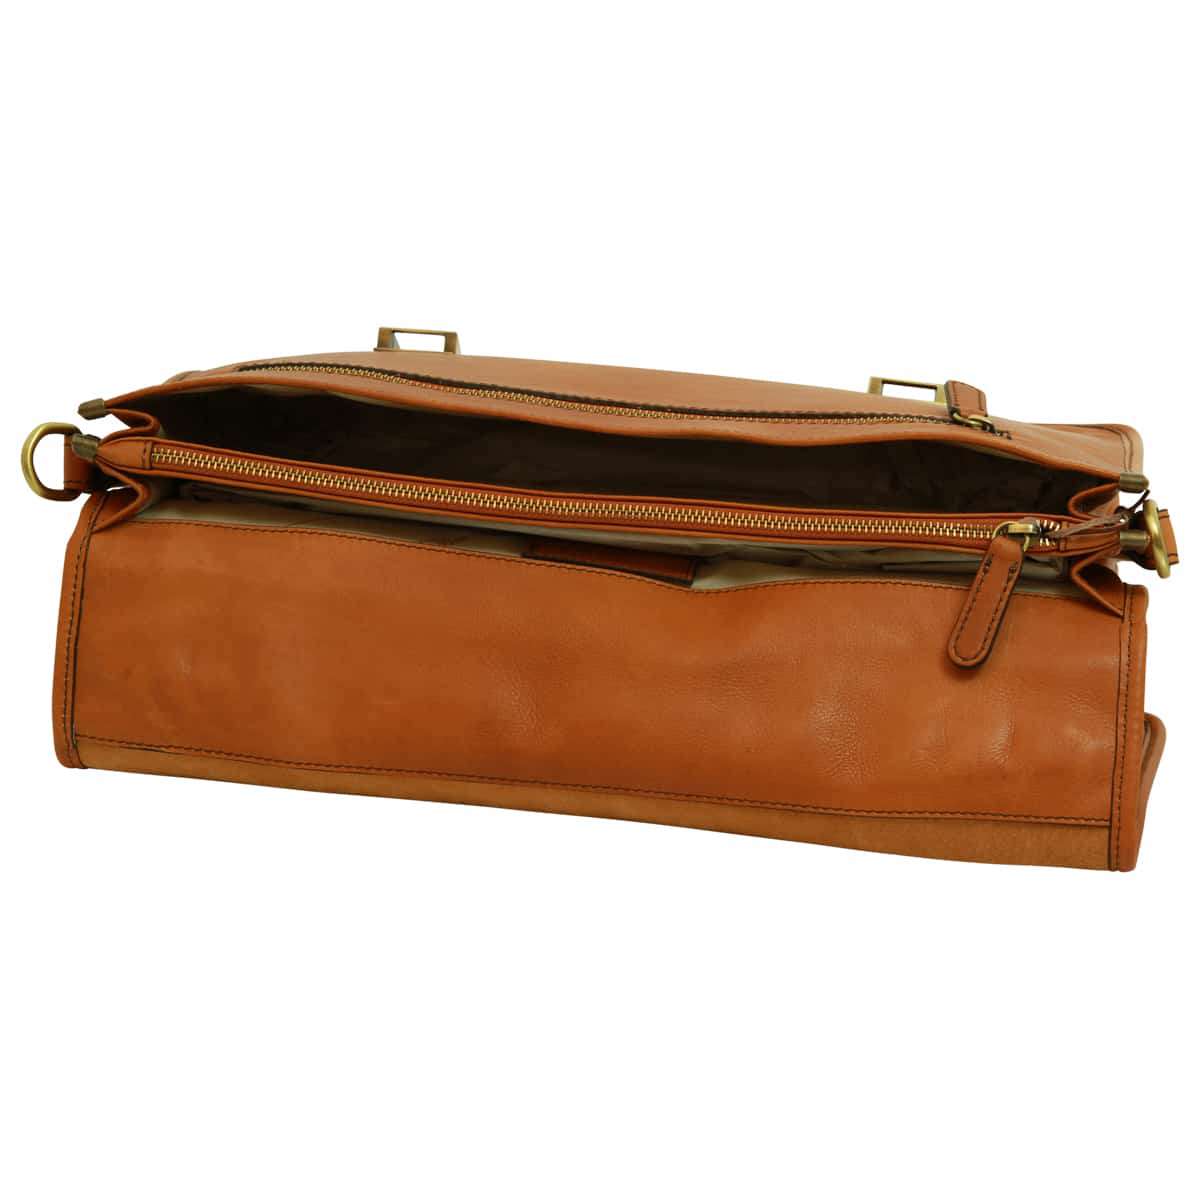 Soft Calfskin Leather Briefcase with shoulder strap - Gold | 030991CO UK | Old Angler Firenze